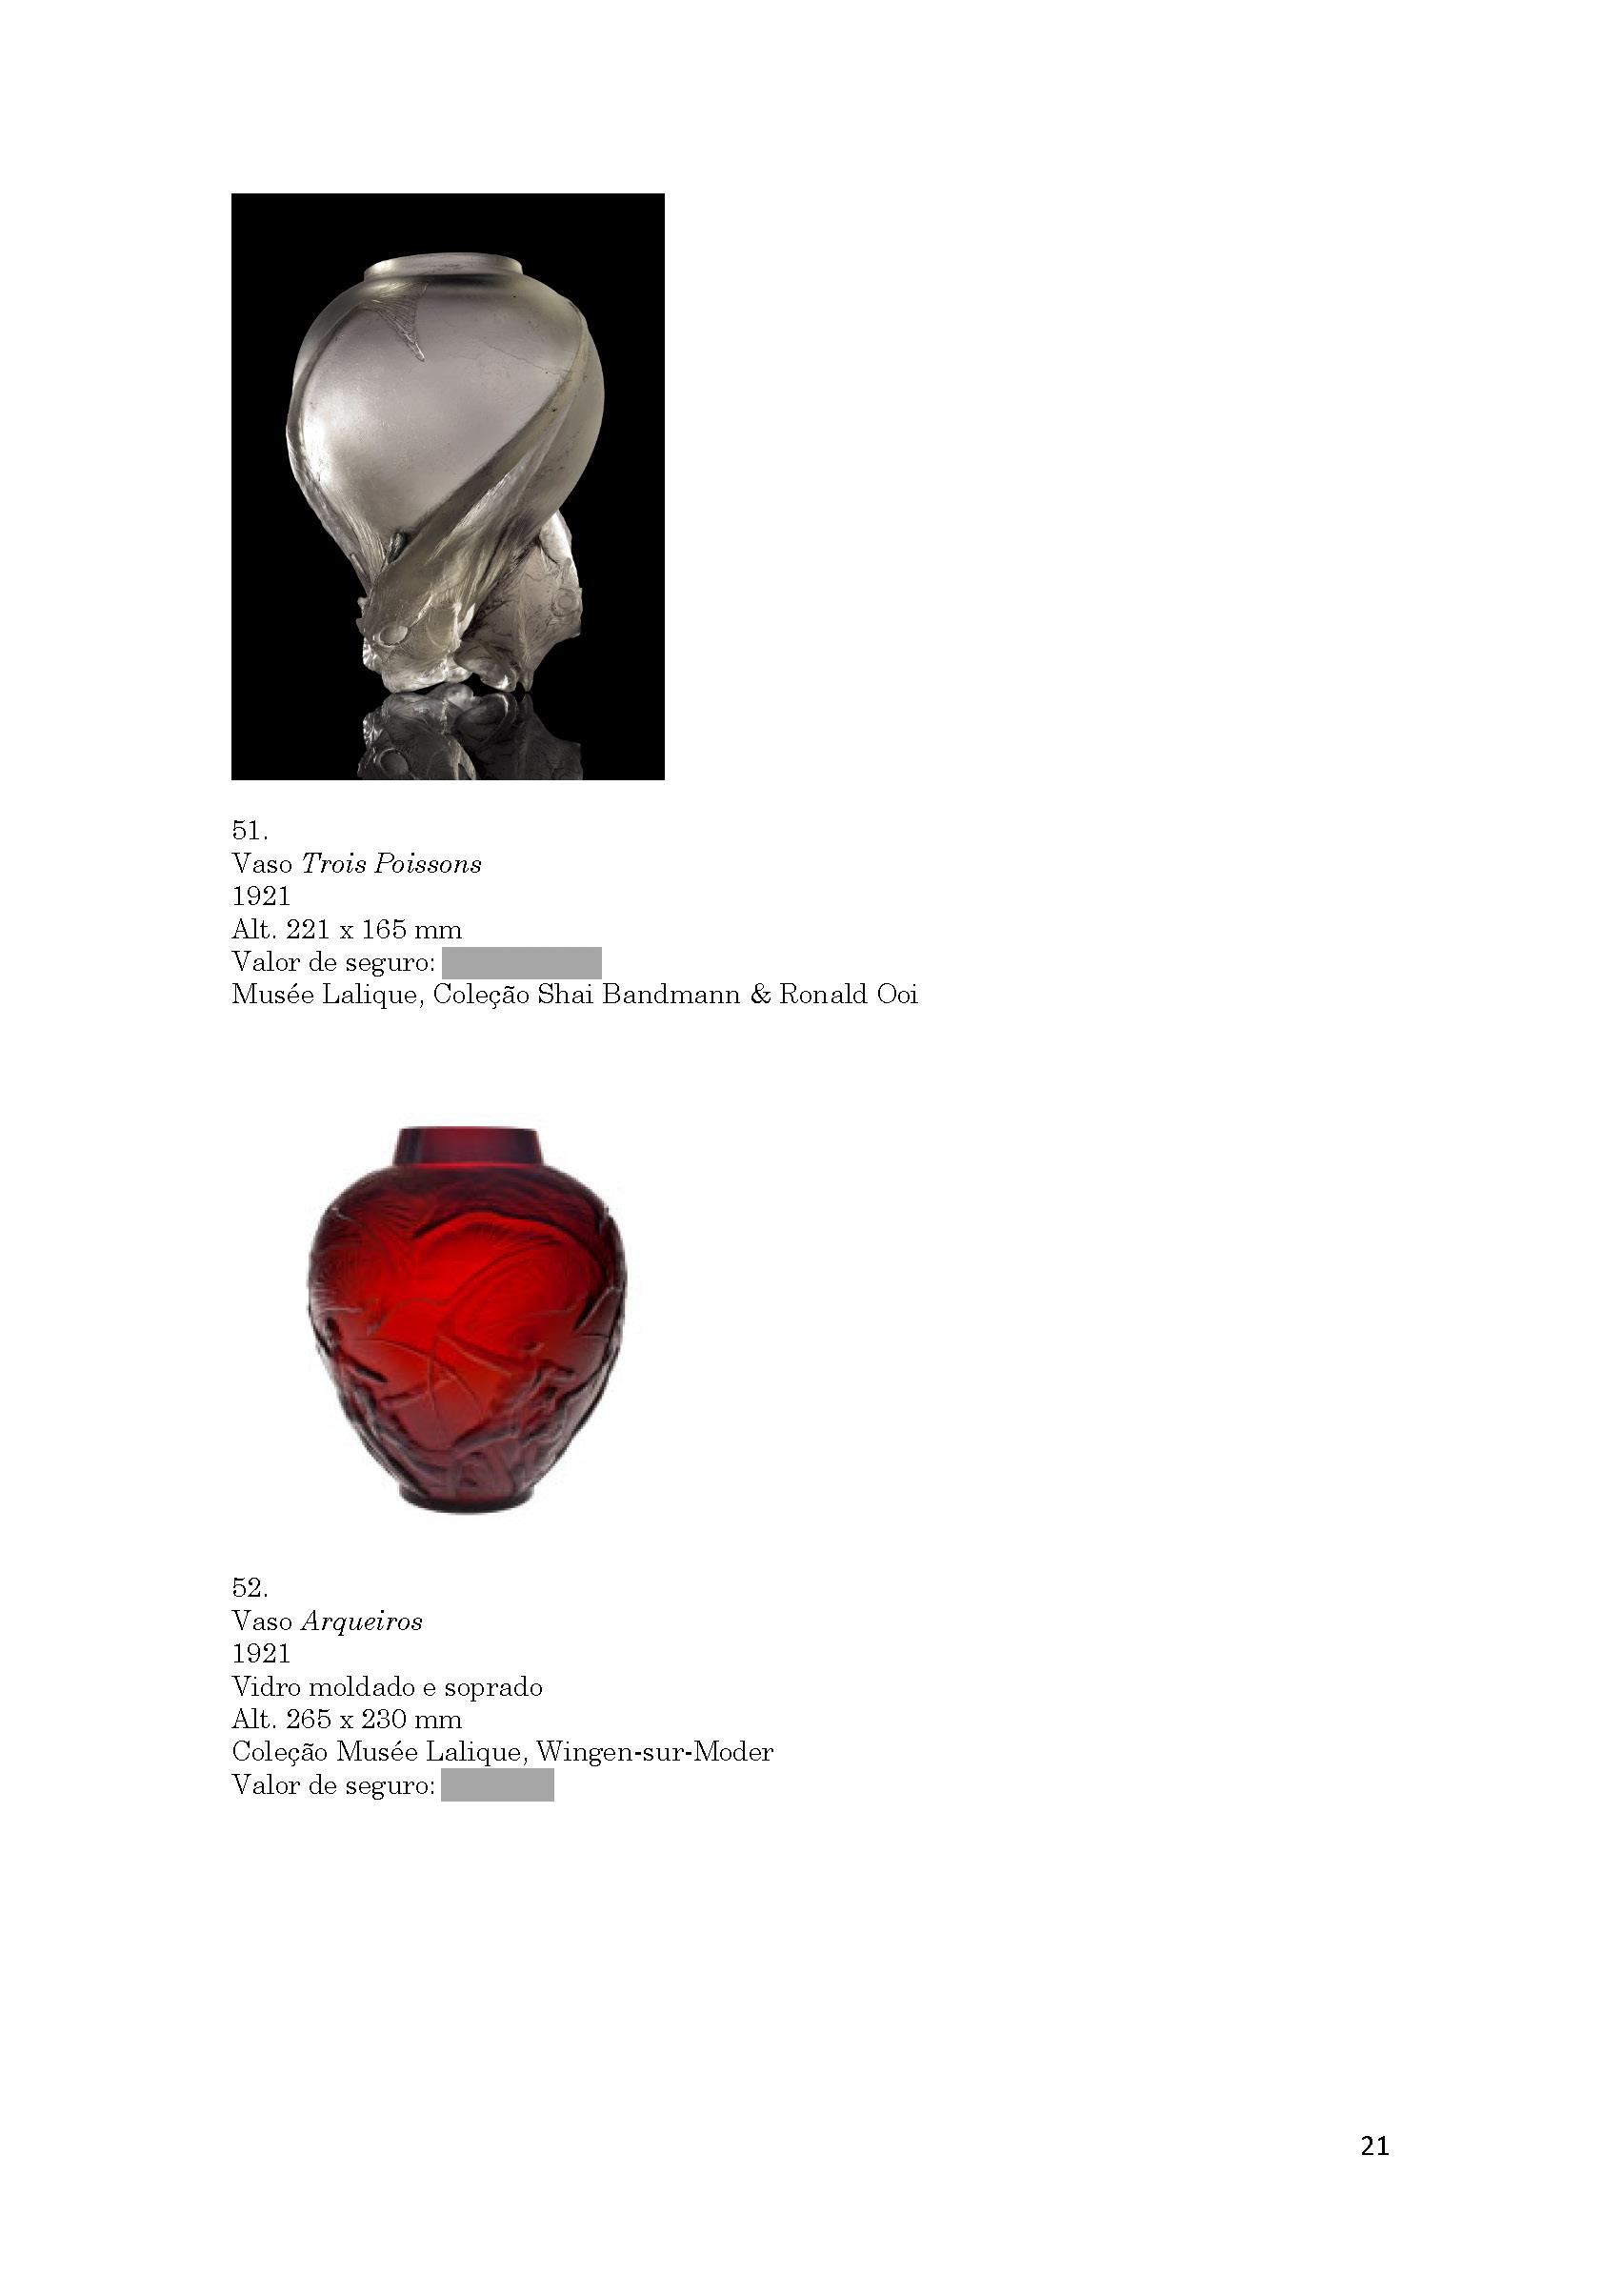 Lista_Vidros_Lalique_25.09.2020_1.21